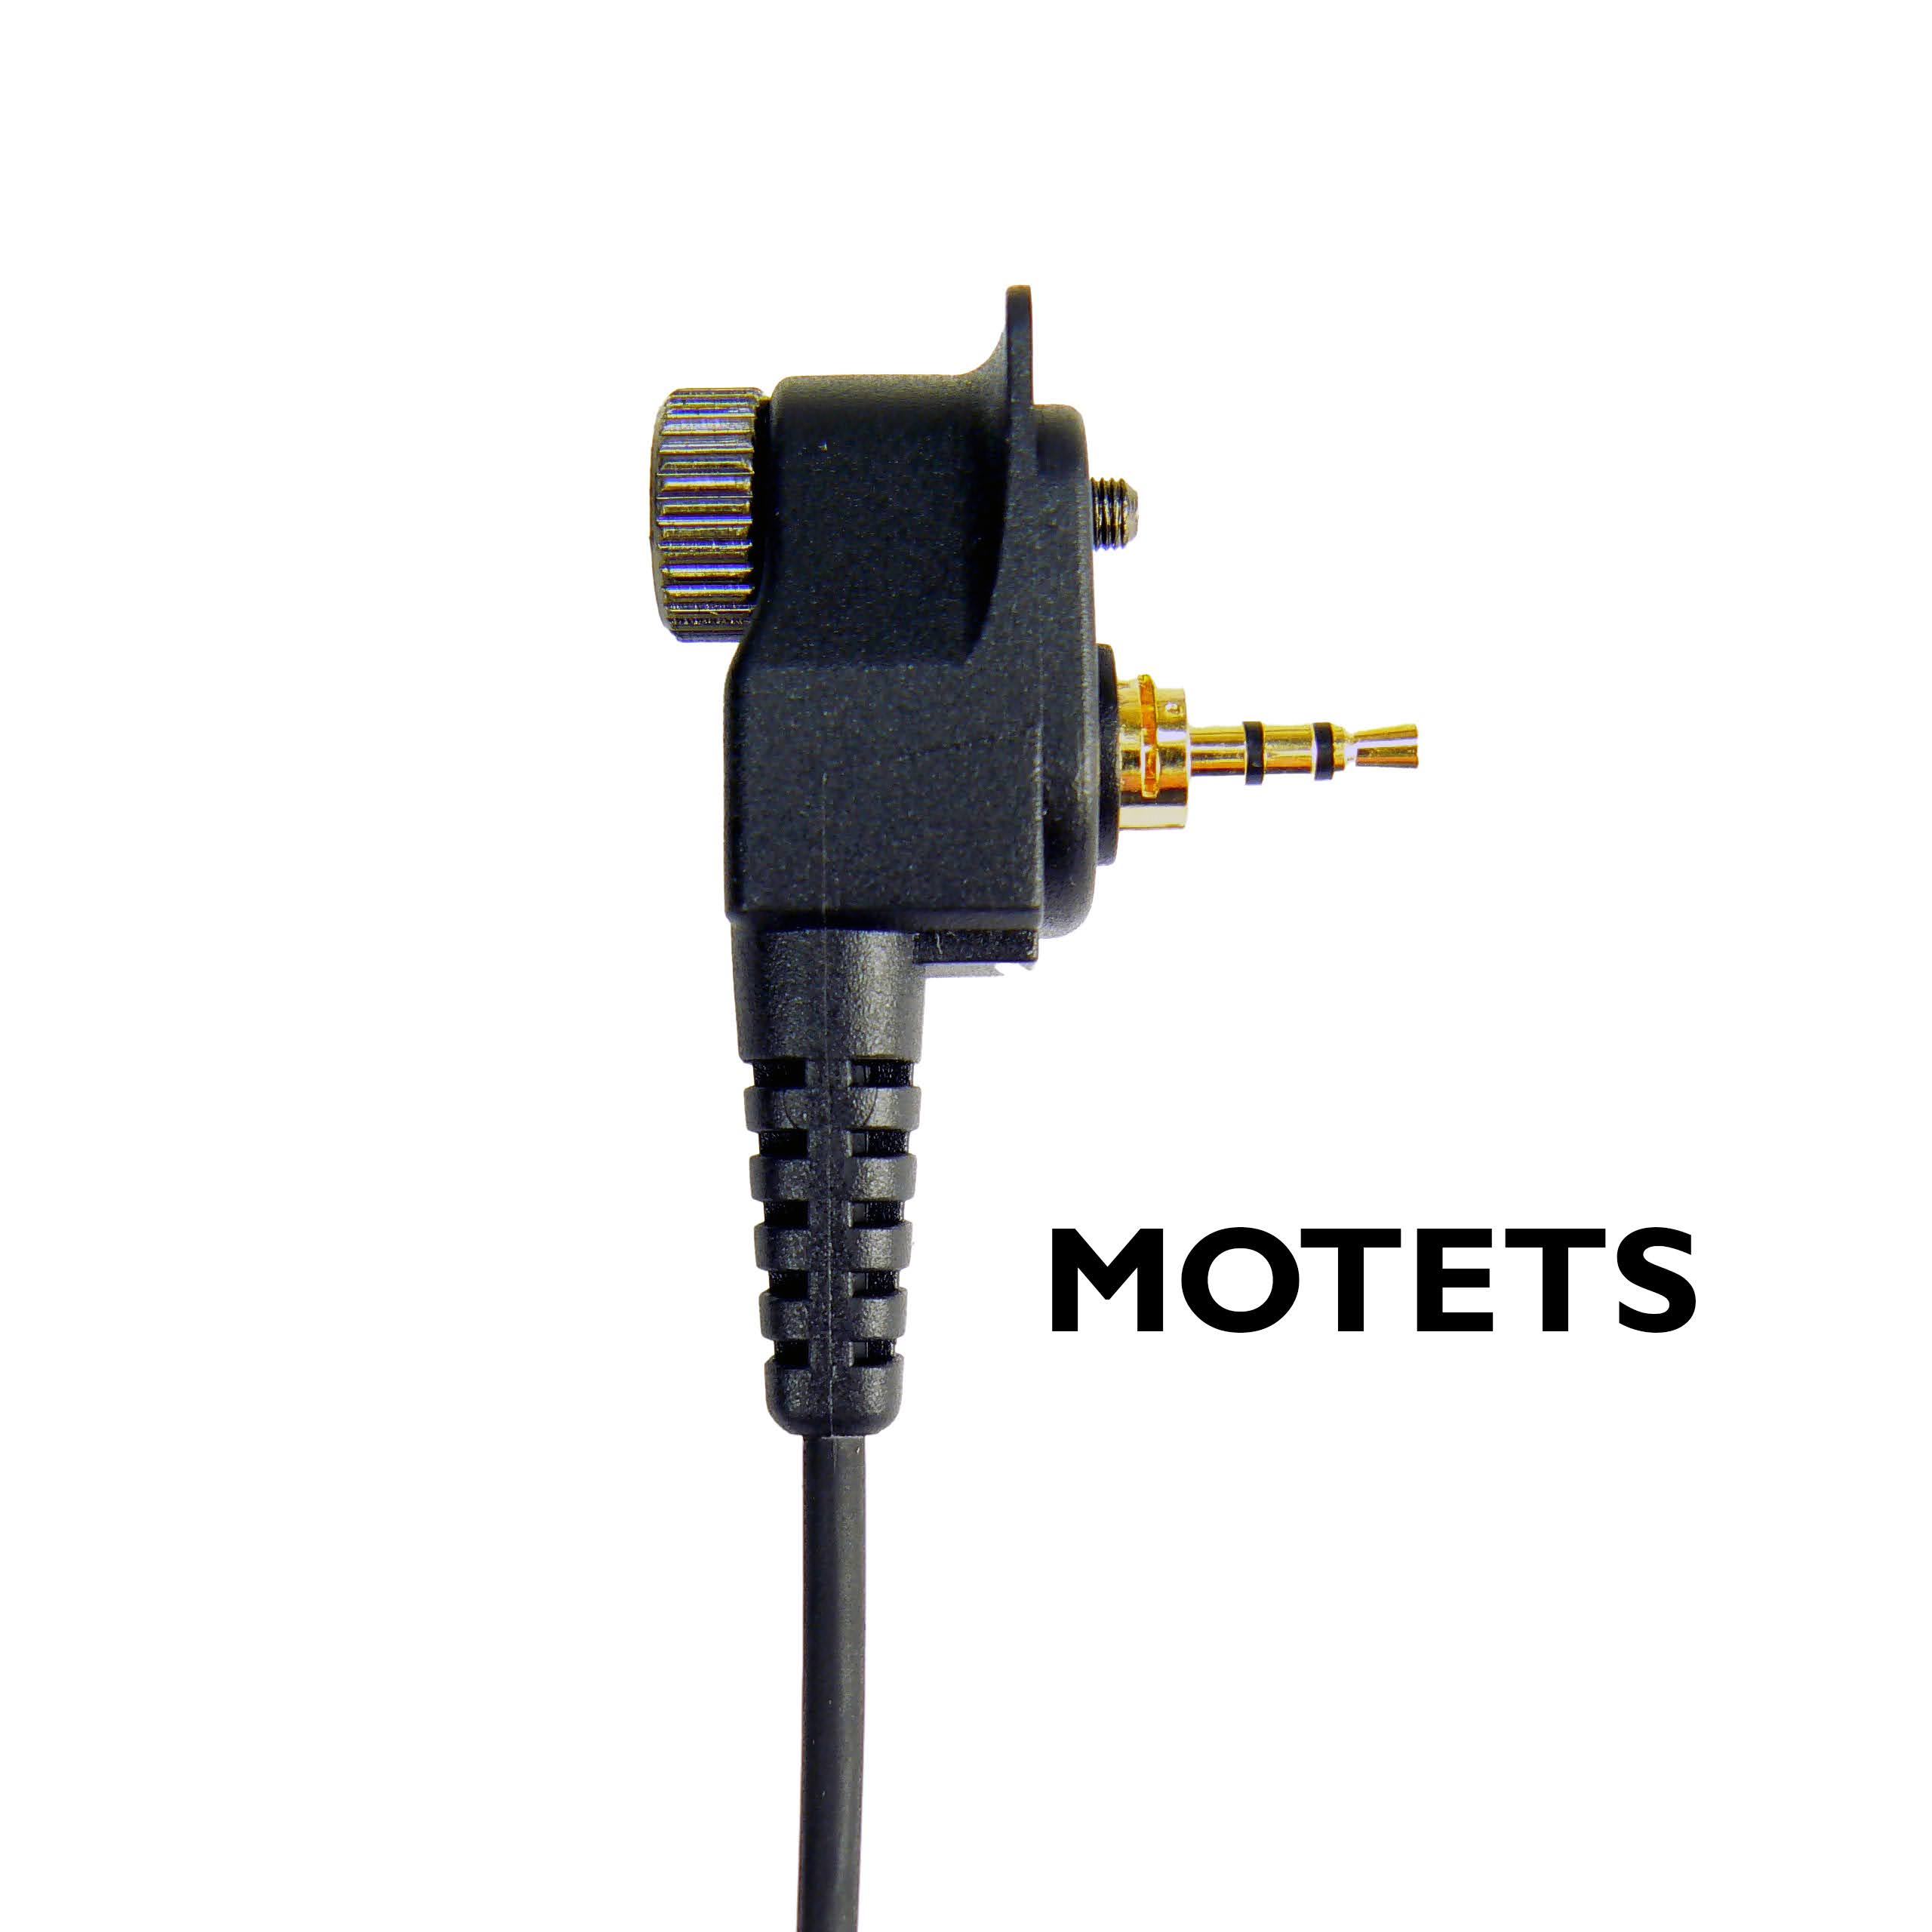 MOTETS plug ending